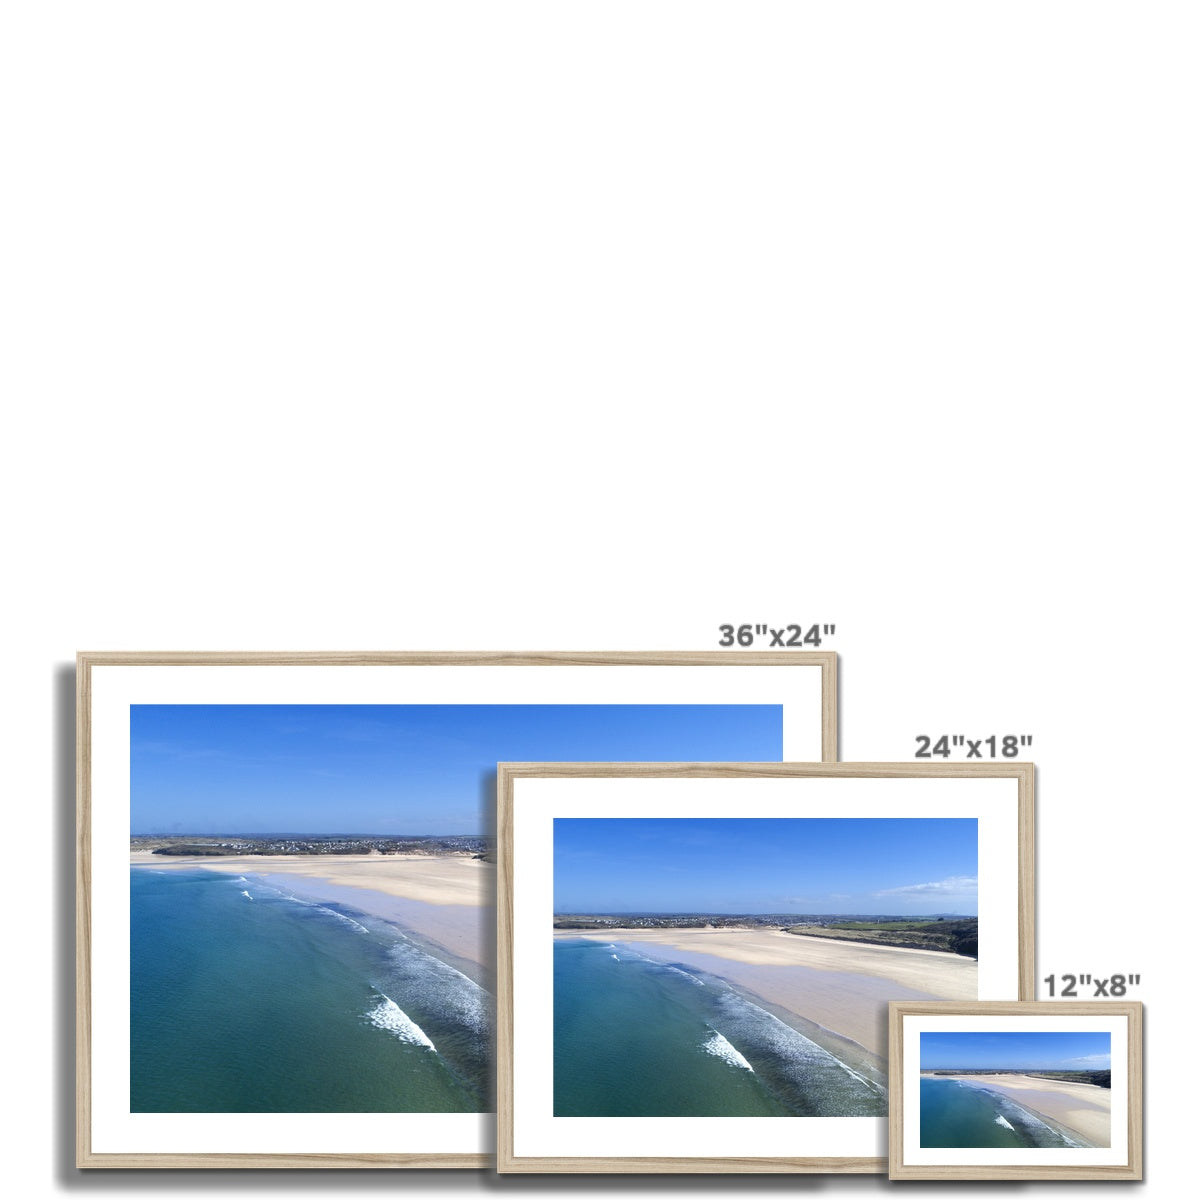 porthkidney beach wooden frame sizes